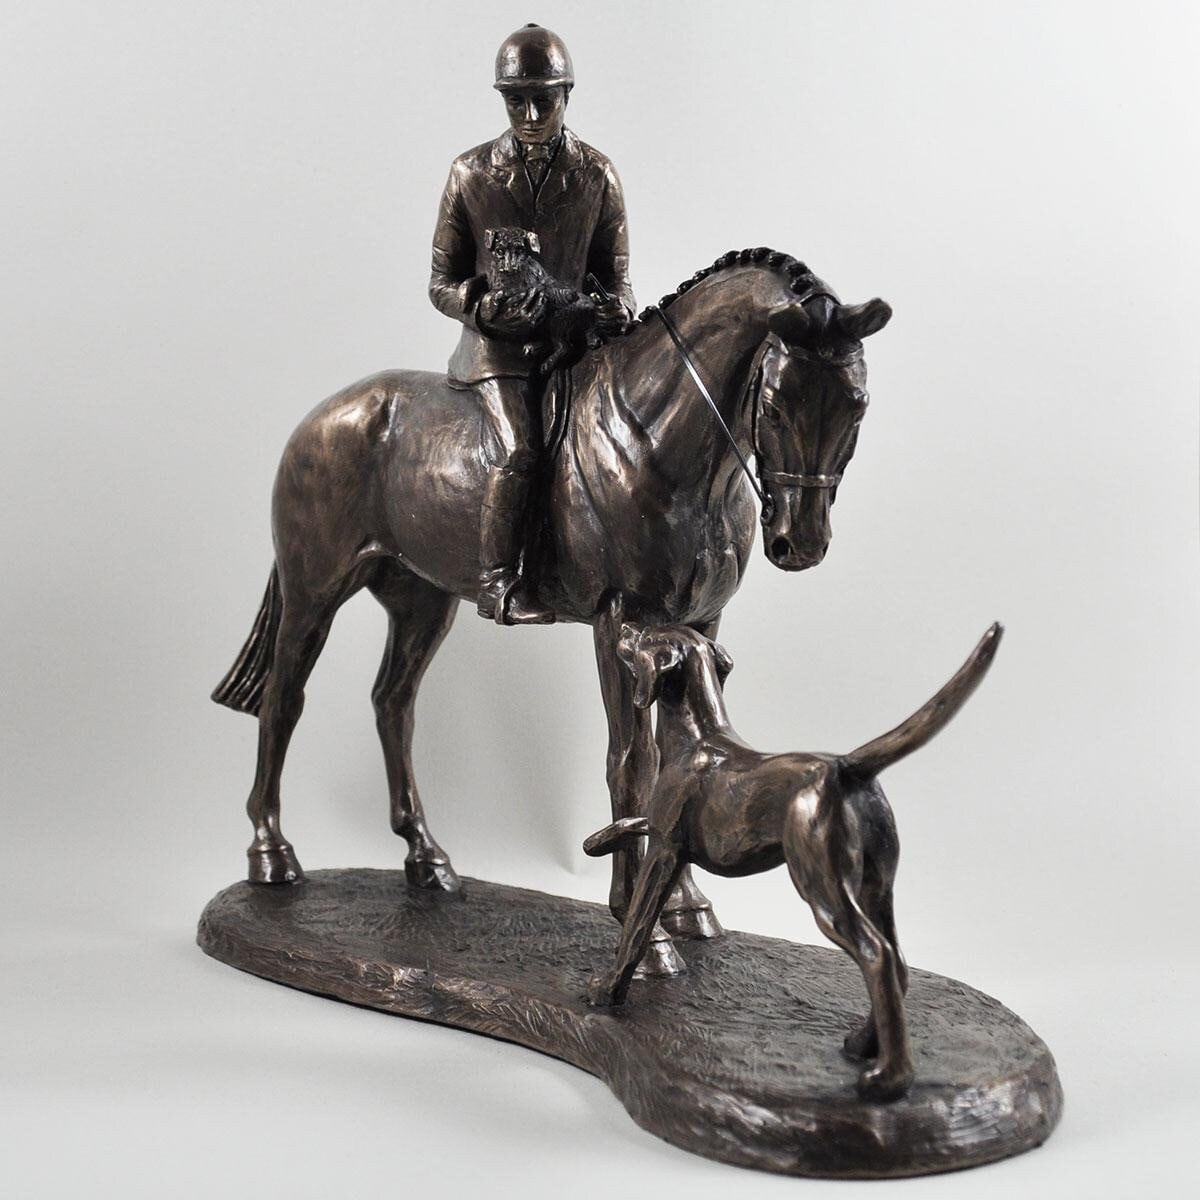 Country companions hunter and hound figurine (harriet glen) animal sculpture home decor